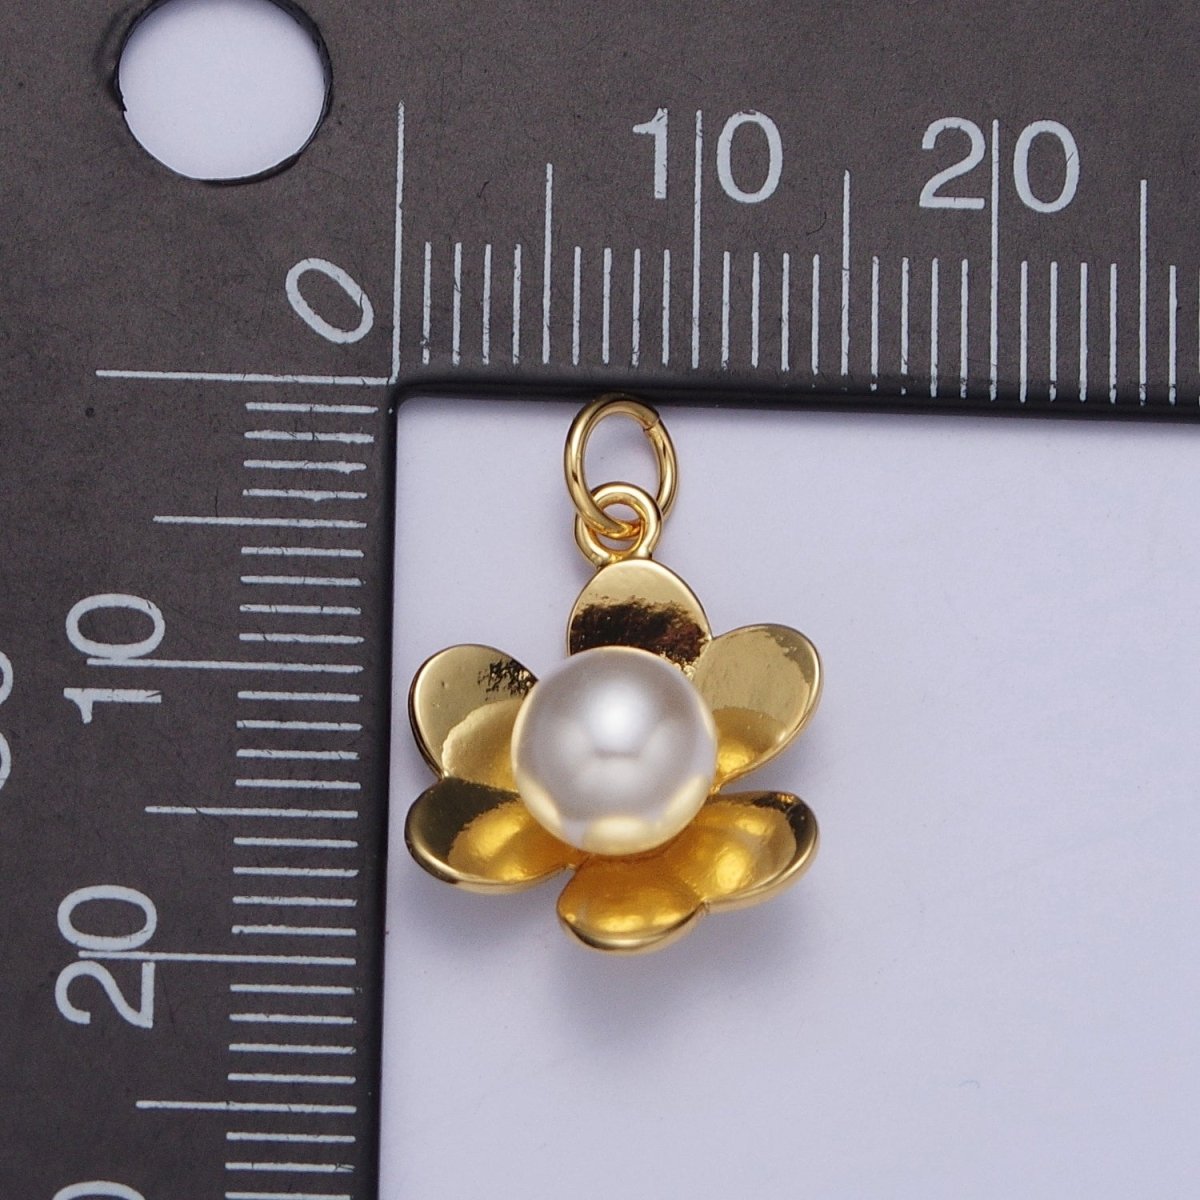 Dainty Minimalist Daisy Flower Charm, Small Simple Gold Daisy Flower For Earring Bracelet Necklace Jewelry Making AG-129 - DLUXCA